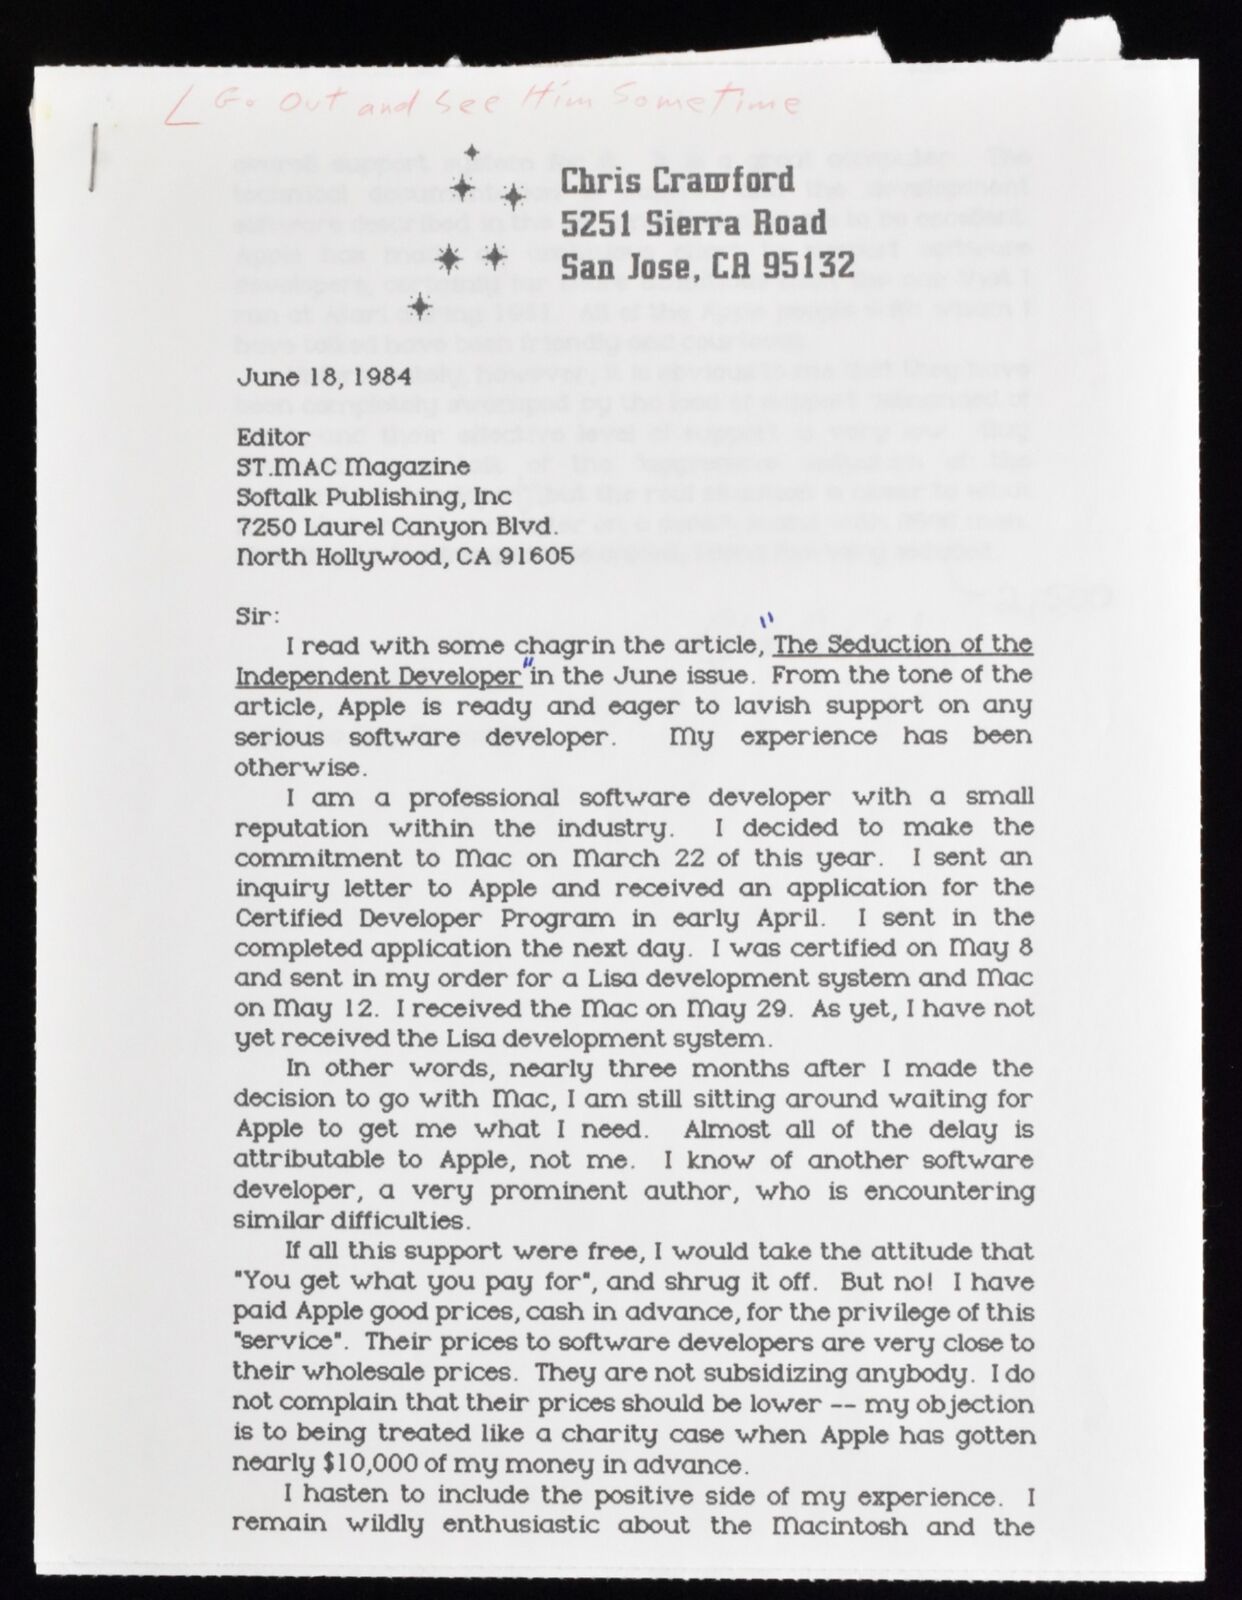 c1984 Softalk Magazine ST MAC Letter to Editor Chris Crawford cc: Guy Kawasaki